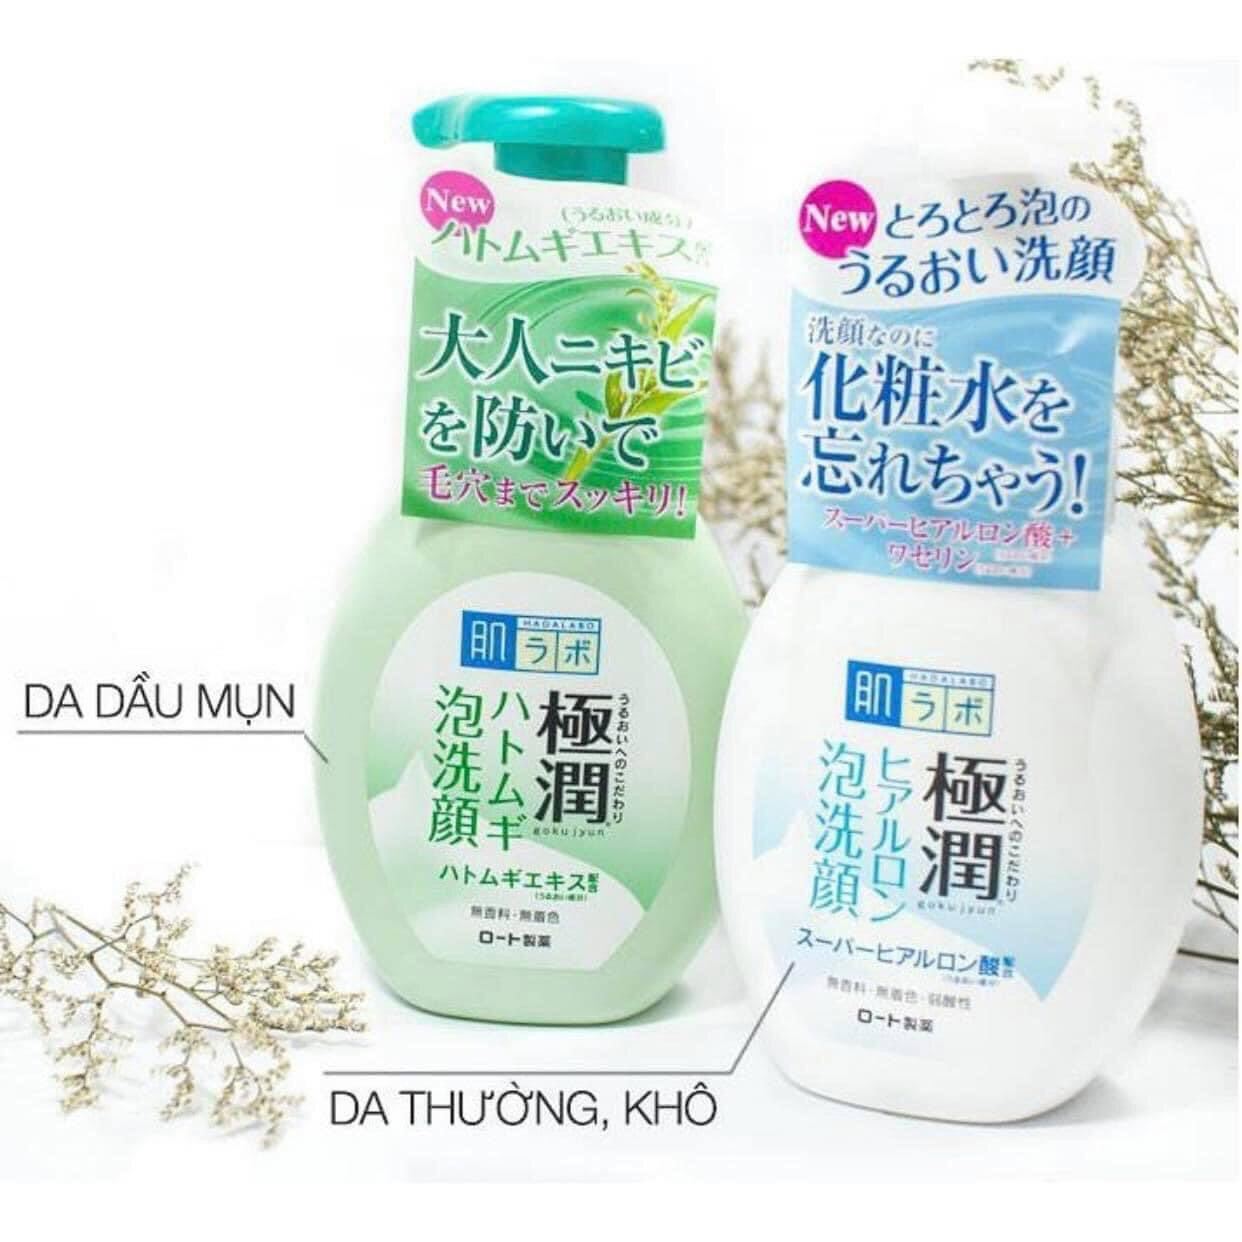 Sữa Rửa Mặt tạo bọt Hada Labo 160ml Nhật Bản. - TEPLIS Cosmetics Store